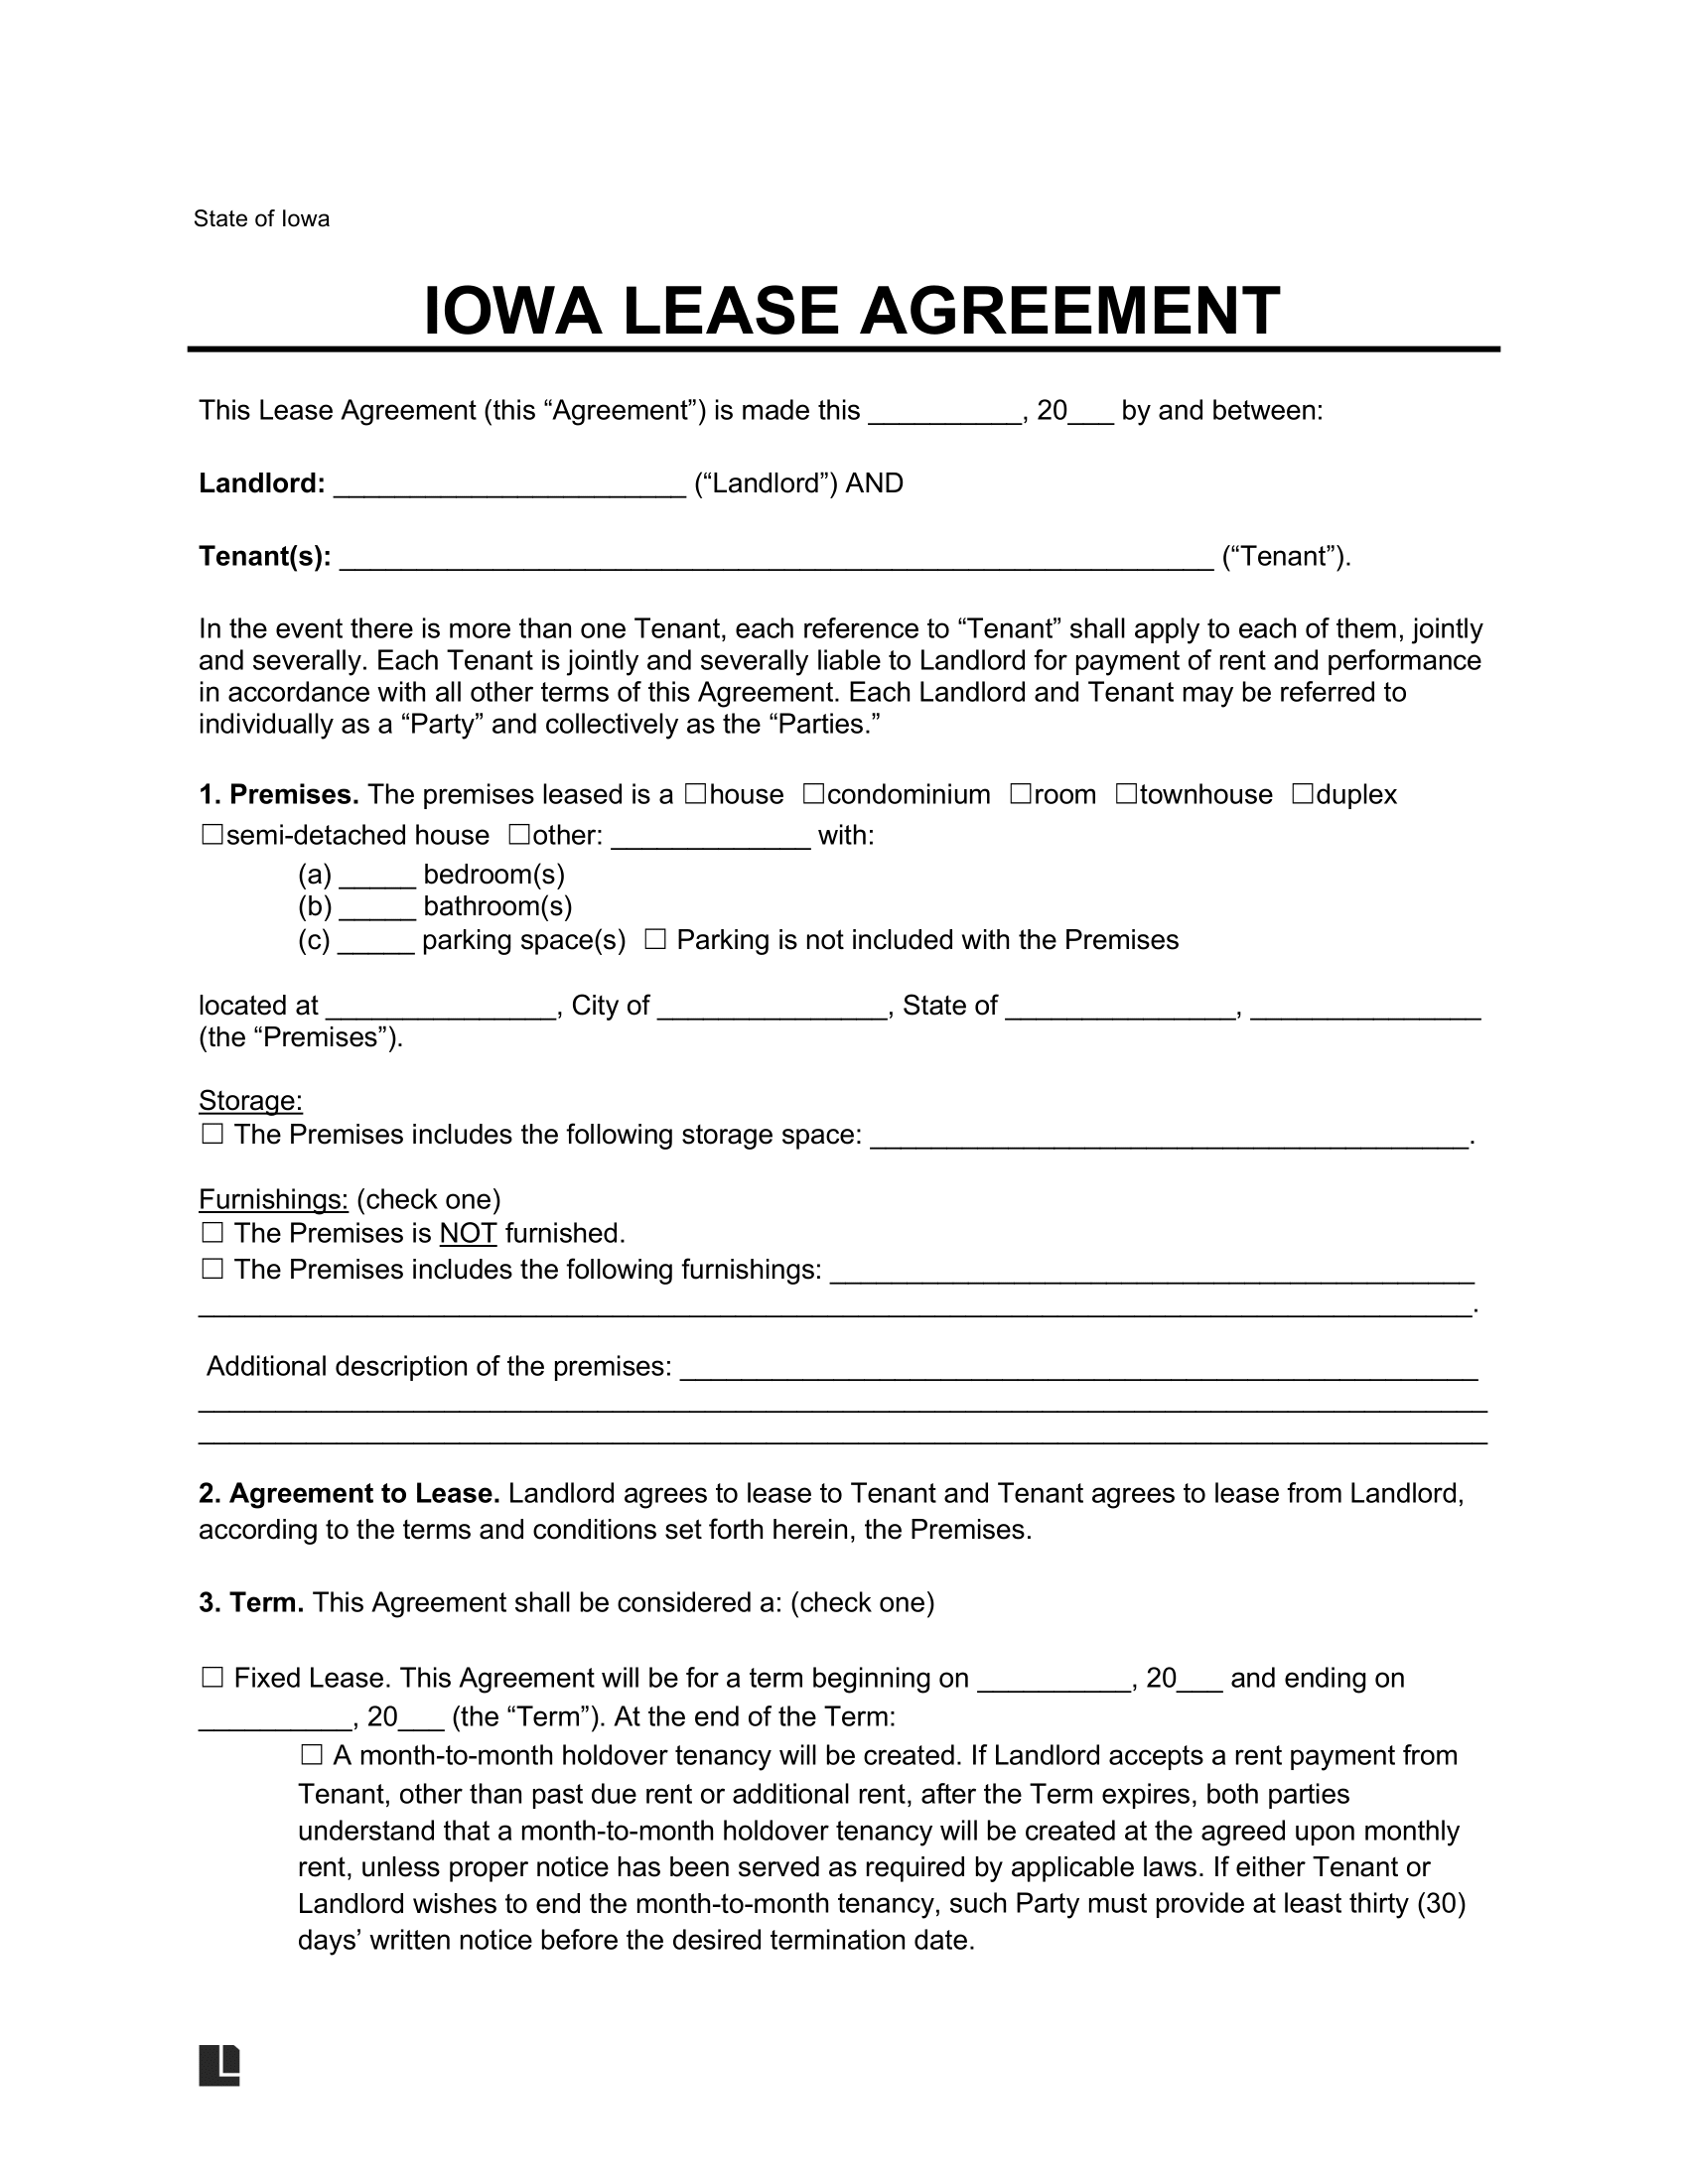 iowa lease agreement